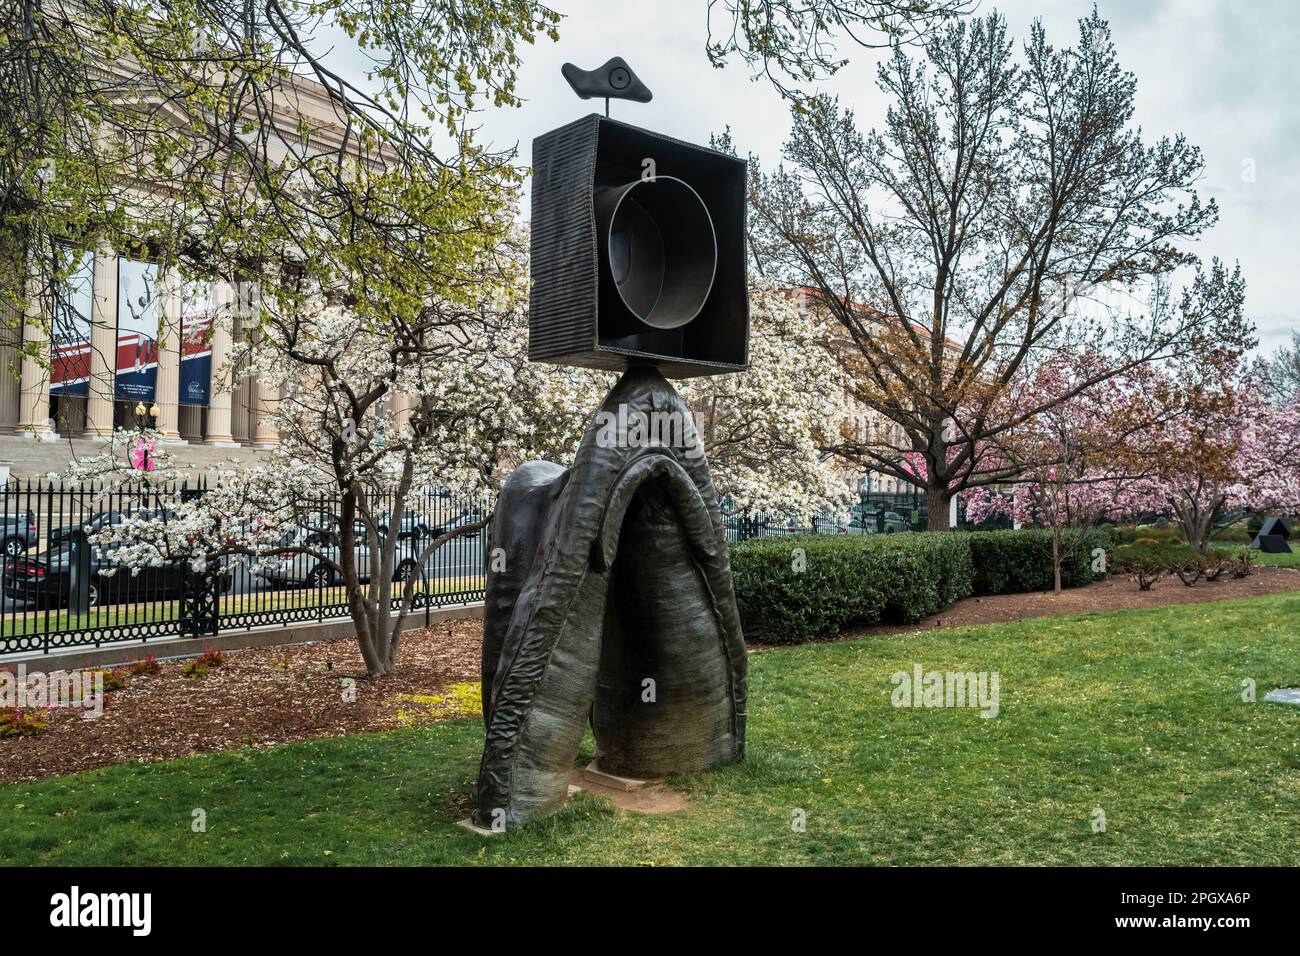 Sculptures at the National Gallery of Art Sculpture Garden in Washington D.C., USA Stock Photo